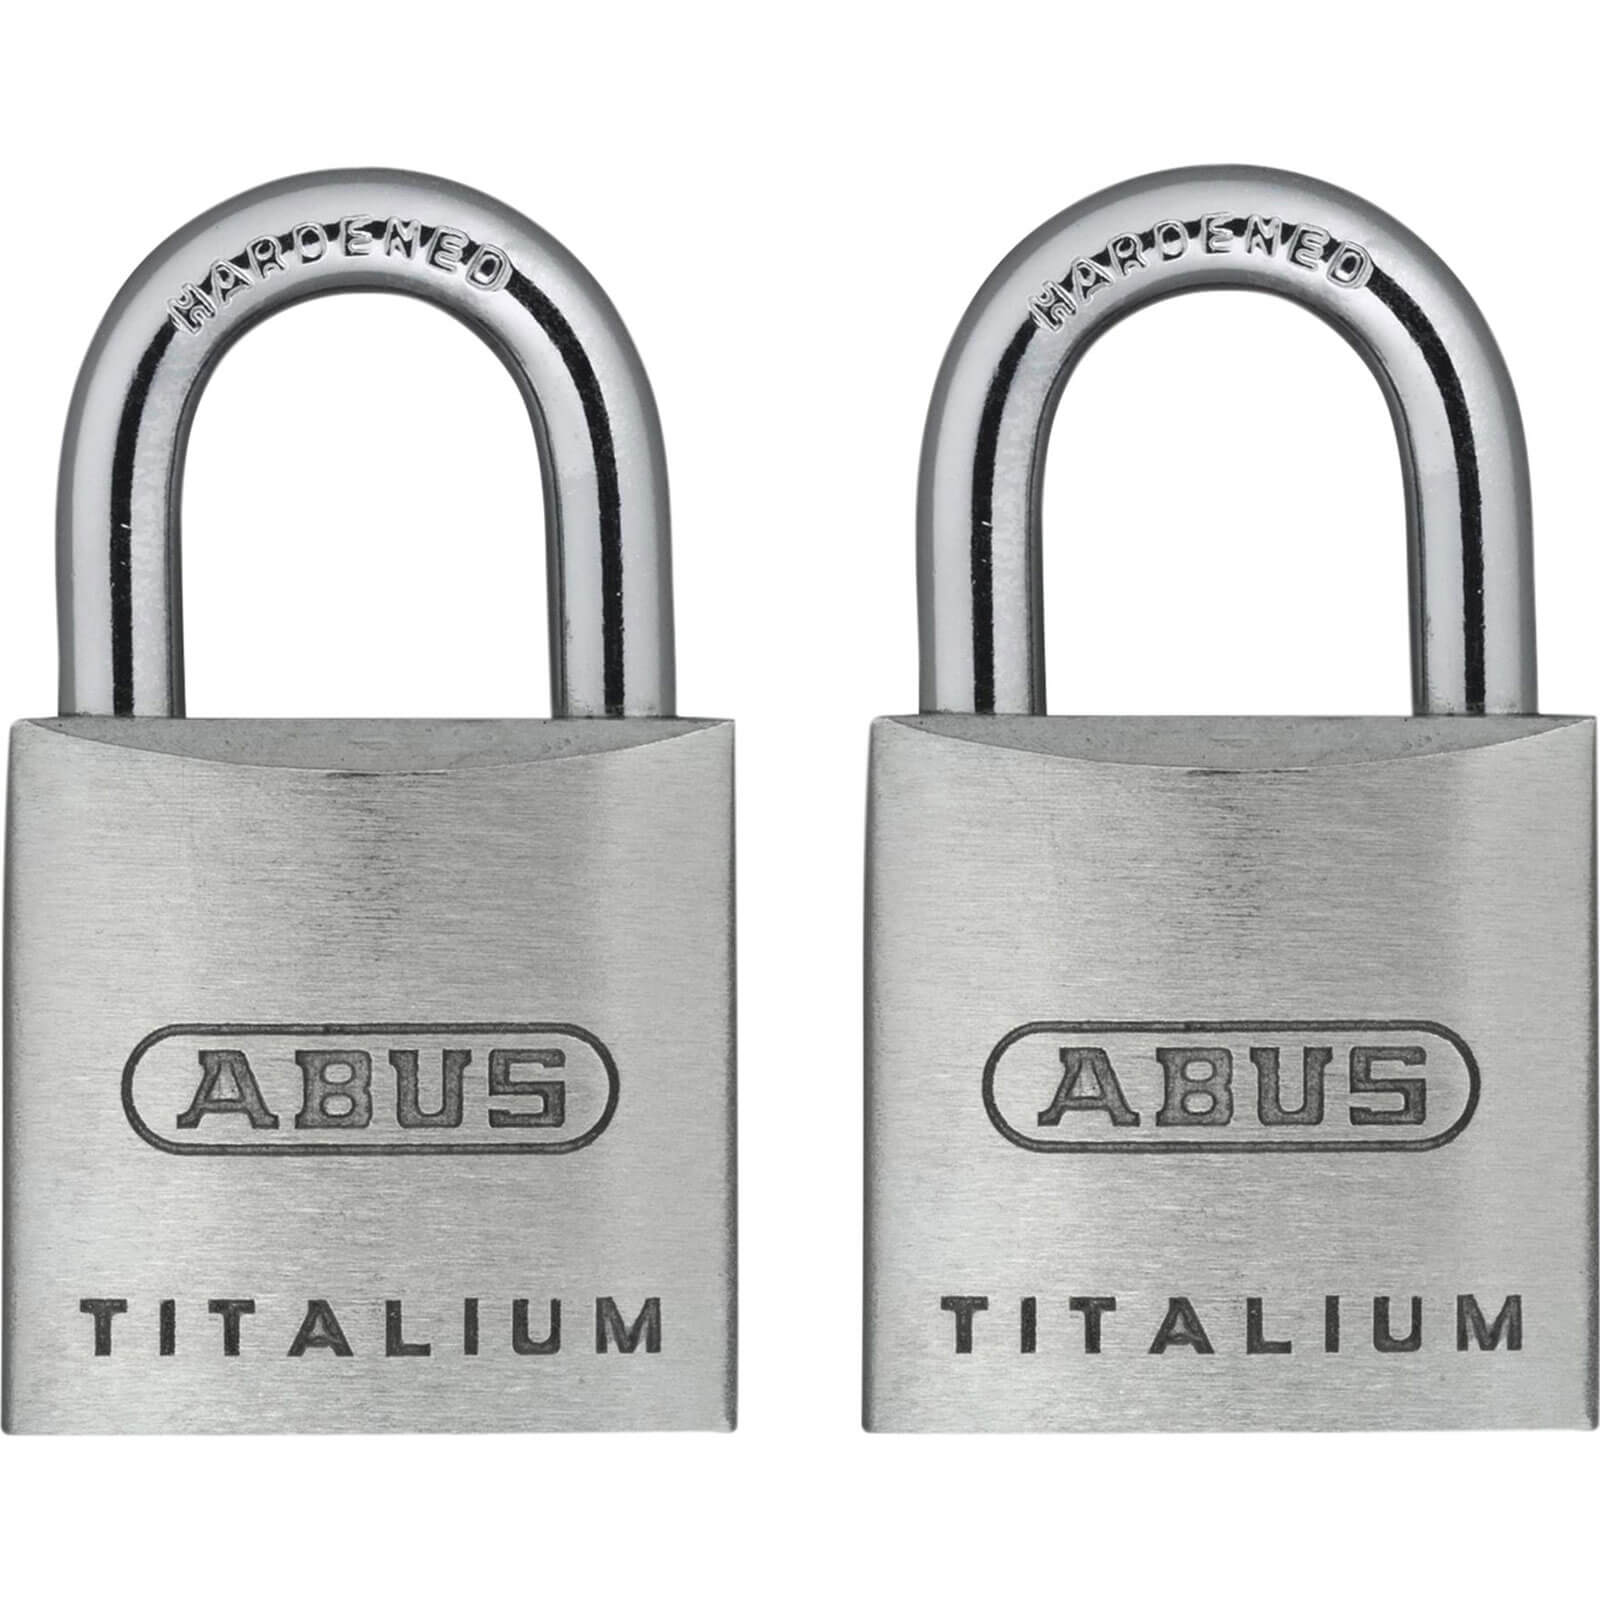 Abus 64TI Series Titalium Padlock Pack of 2 Keyed Alike 20mm Standard